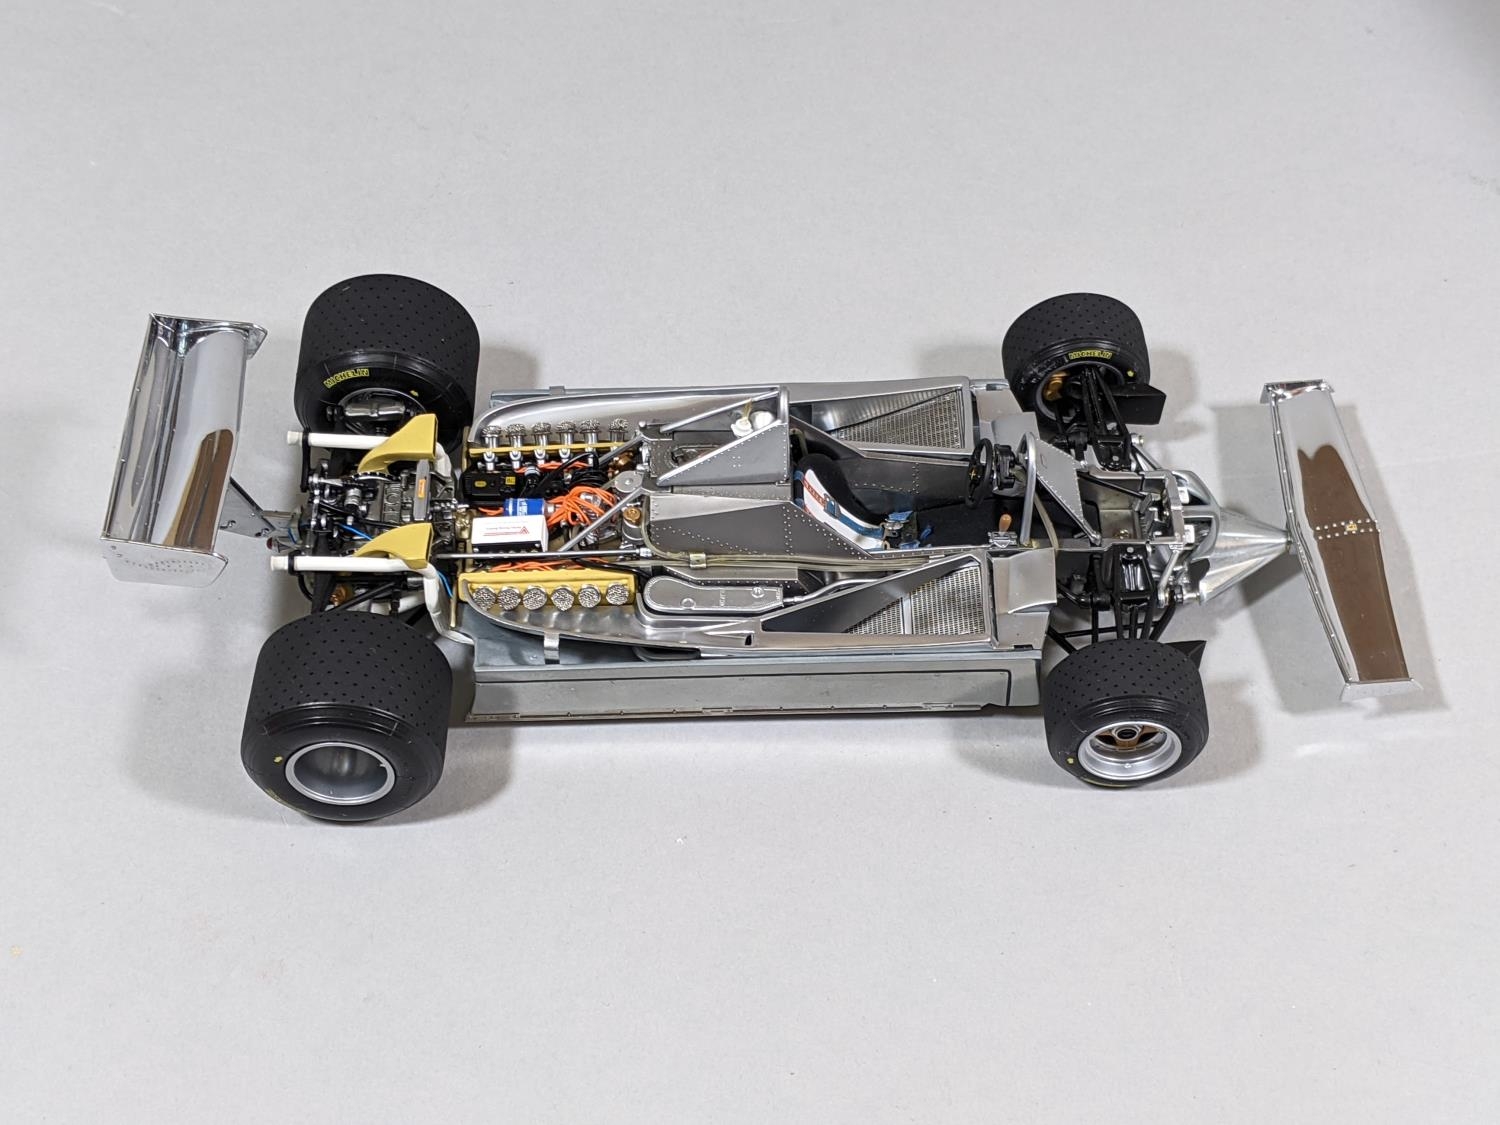 1:18 scale Ferrari 312 T4 Formula 1 racing car in polished aluminium chrome, no 97079 by Exoto - Image 4 of 6